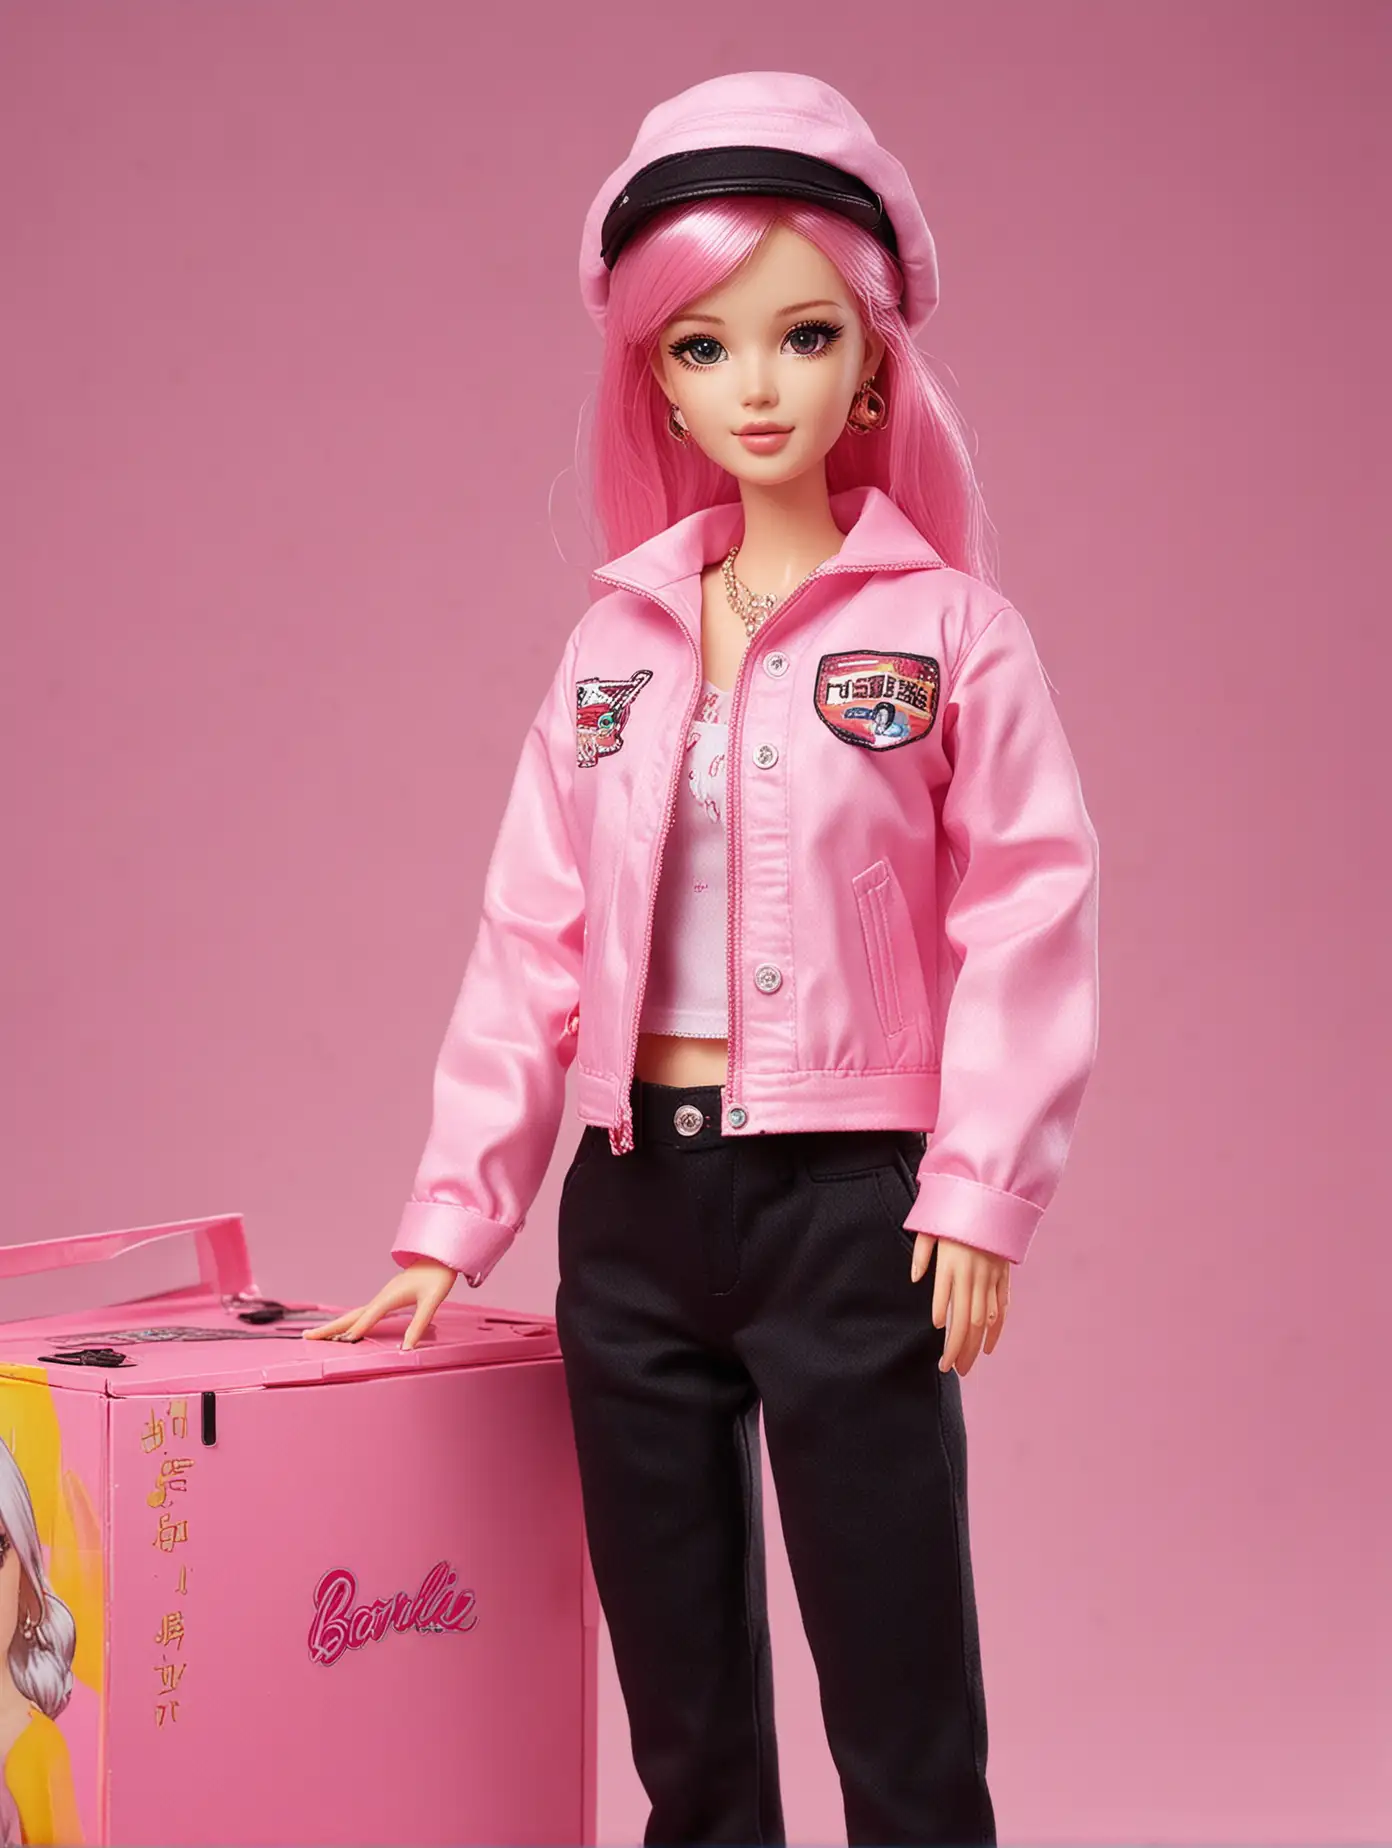 Teenage Barbie Doll Seo Yeaji Stylish in Pink Box with Rainbow Hair